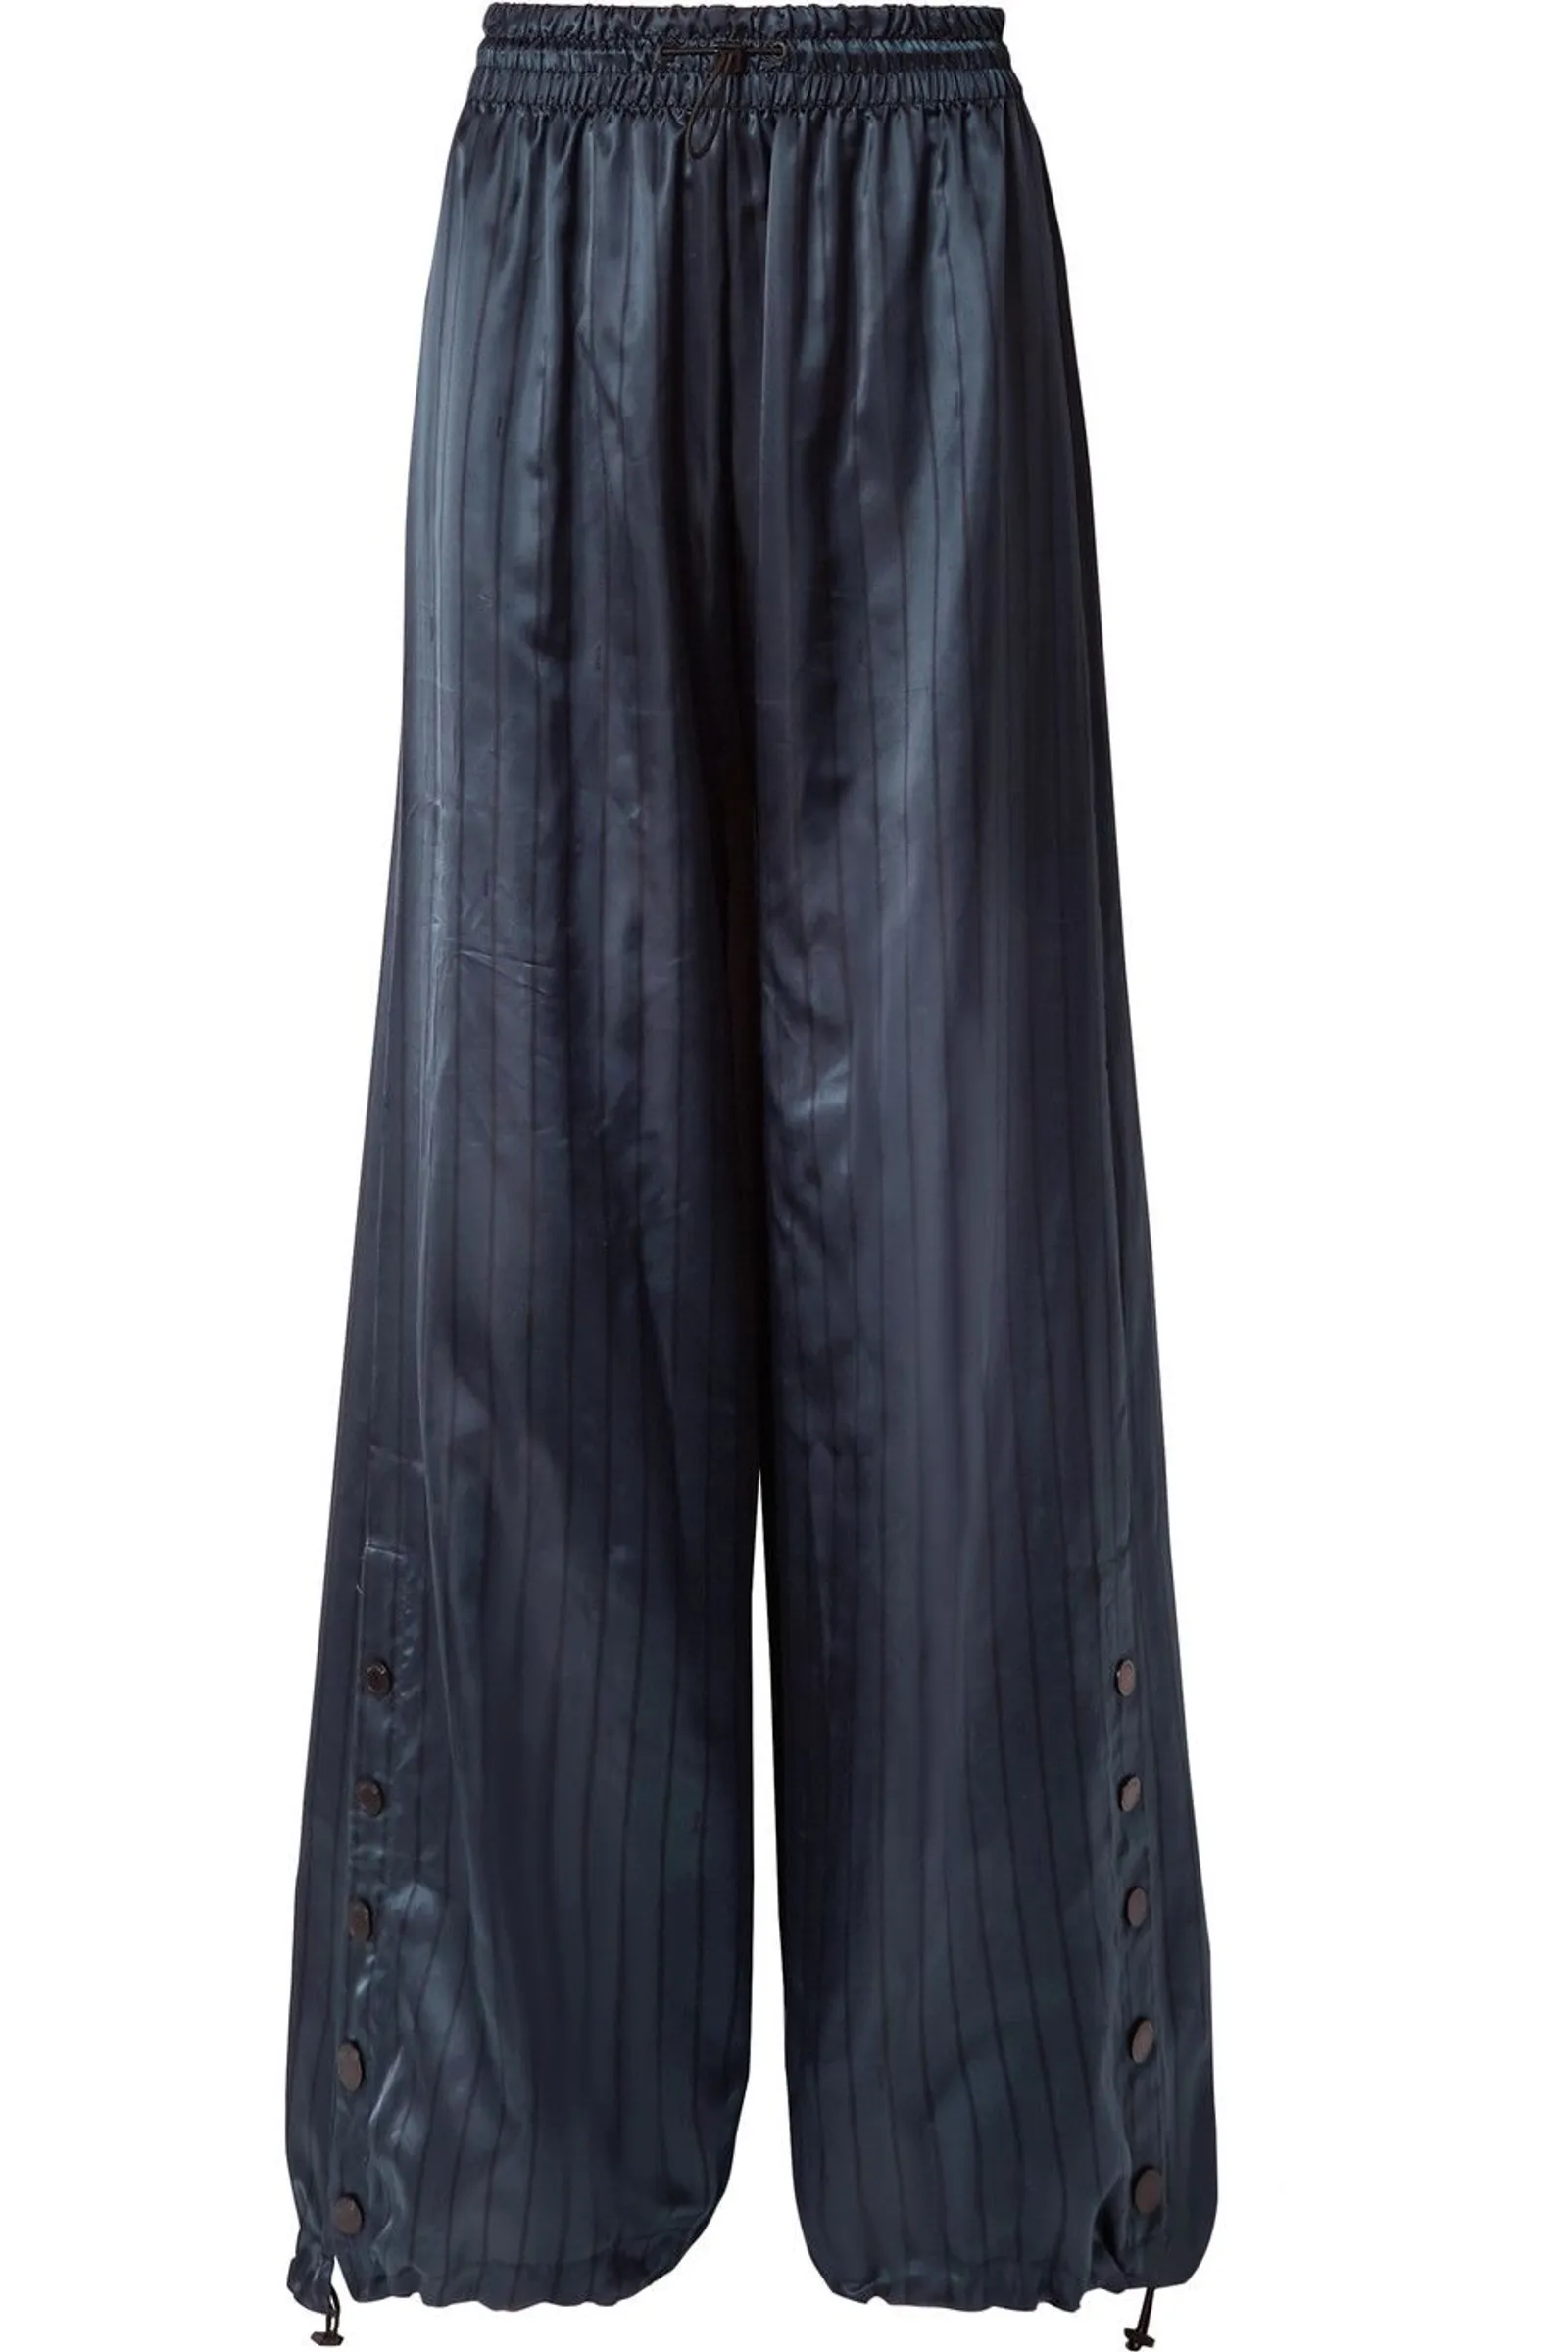 #PopbelaOOTD: Celana yang Buat Kamu Terlihat Tinggi (Plus Kurus!)